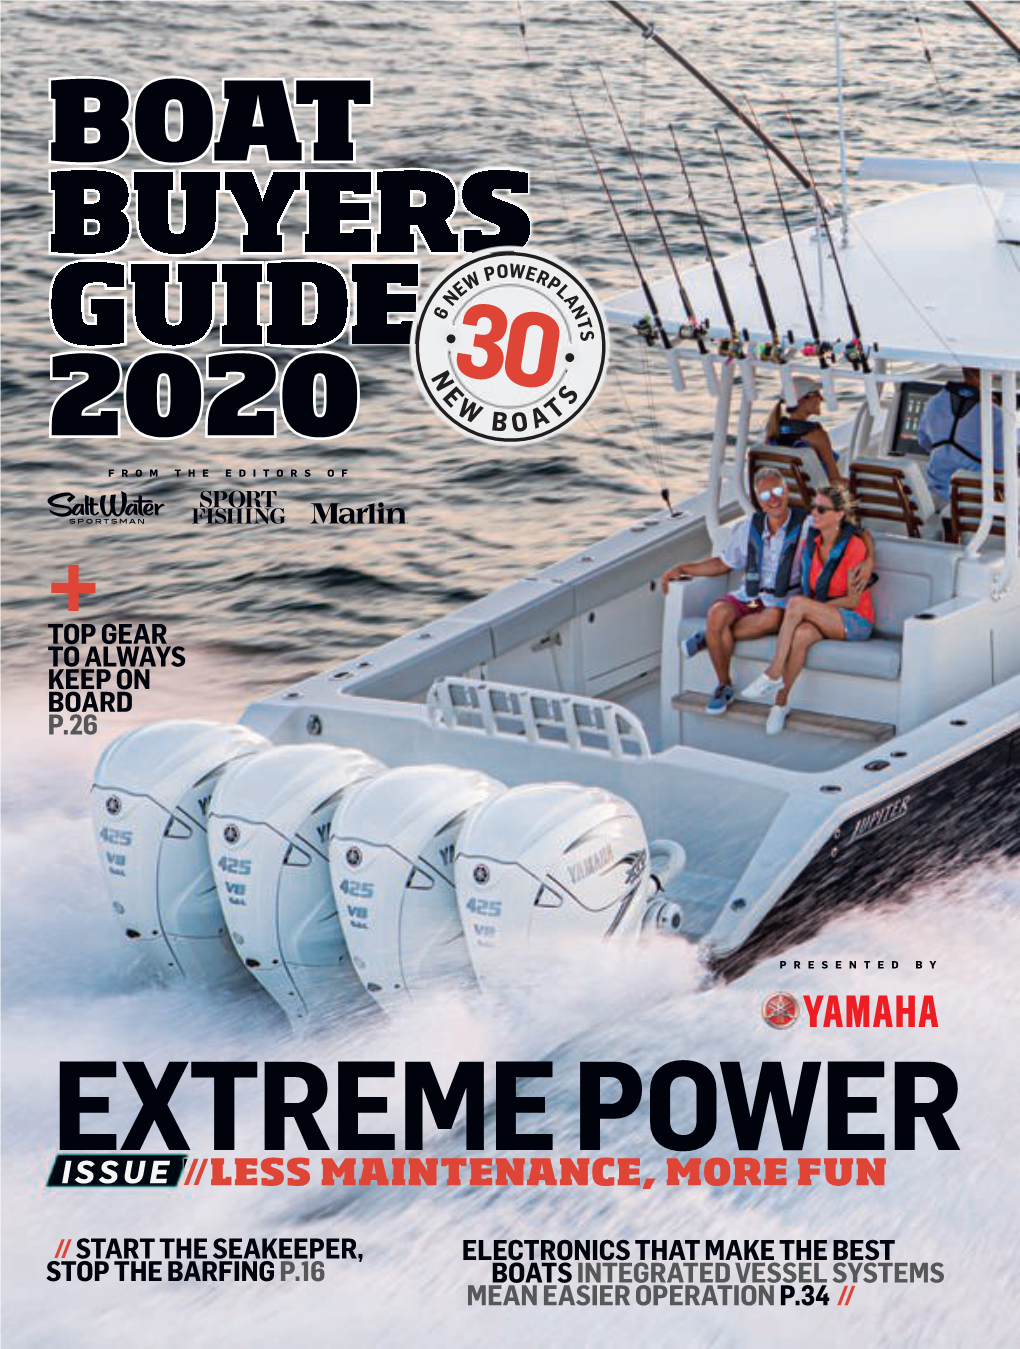 Boat Buyers Guide 2020 9 U.S.A